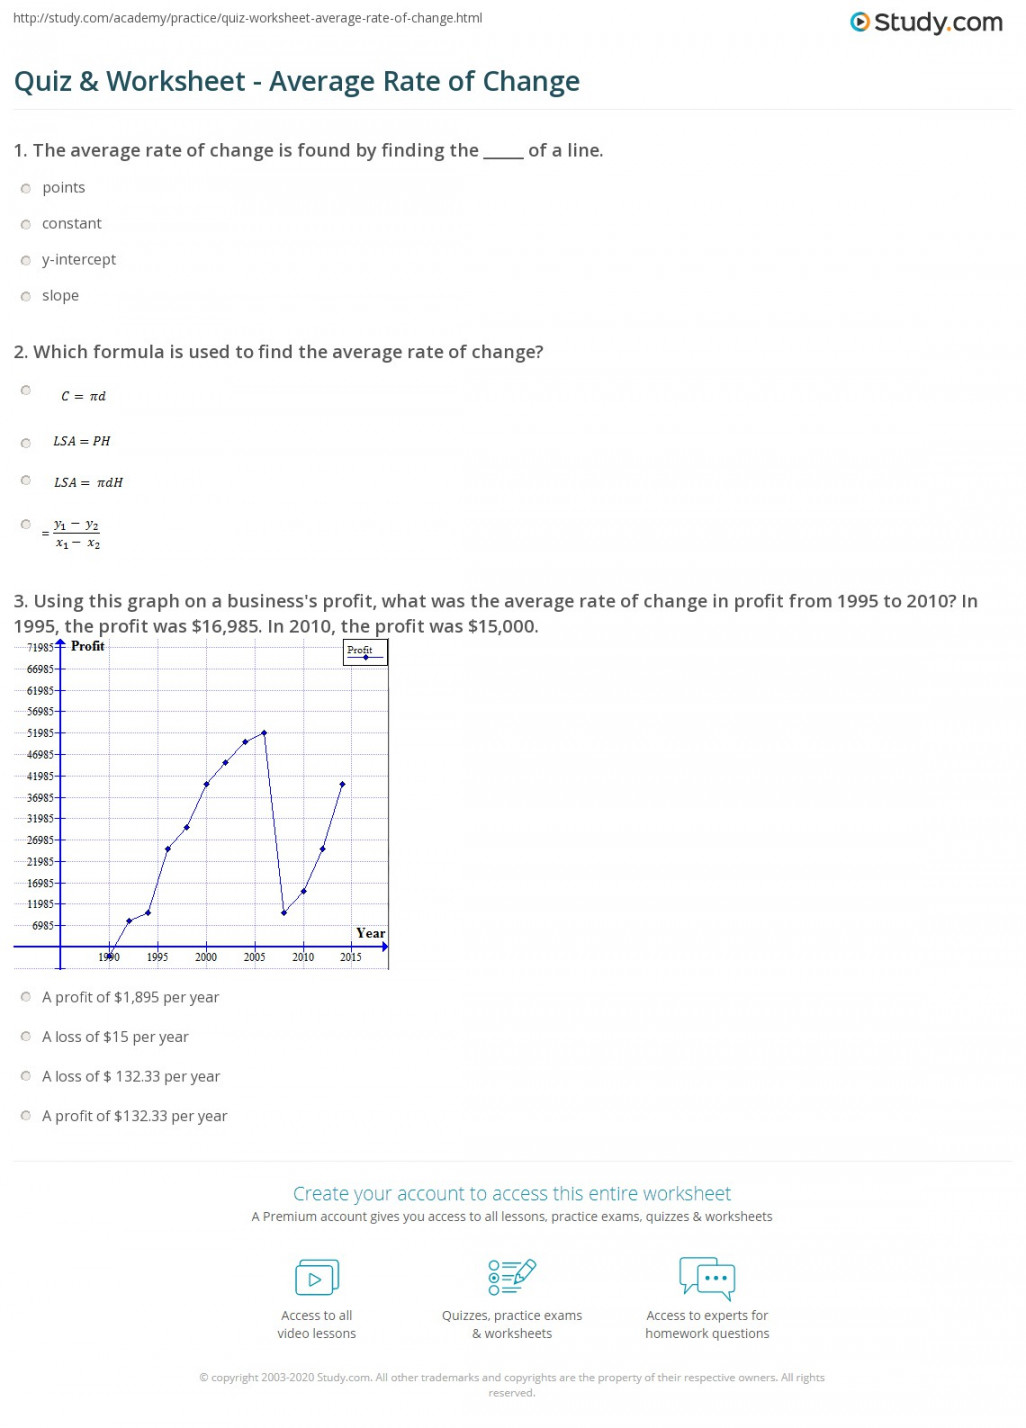 Quiz & Worksheet - Average Rate of Change  Study